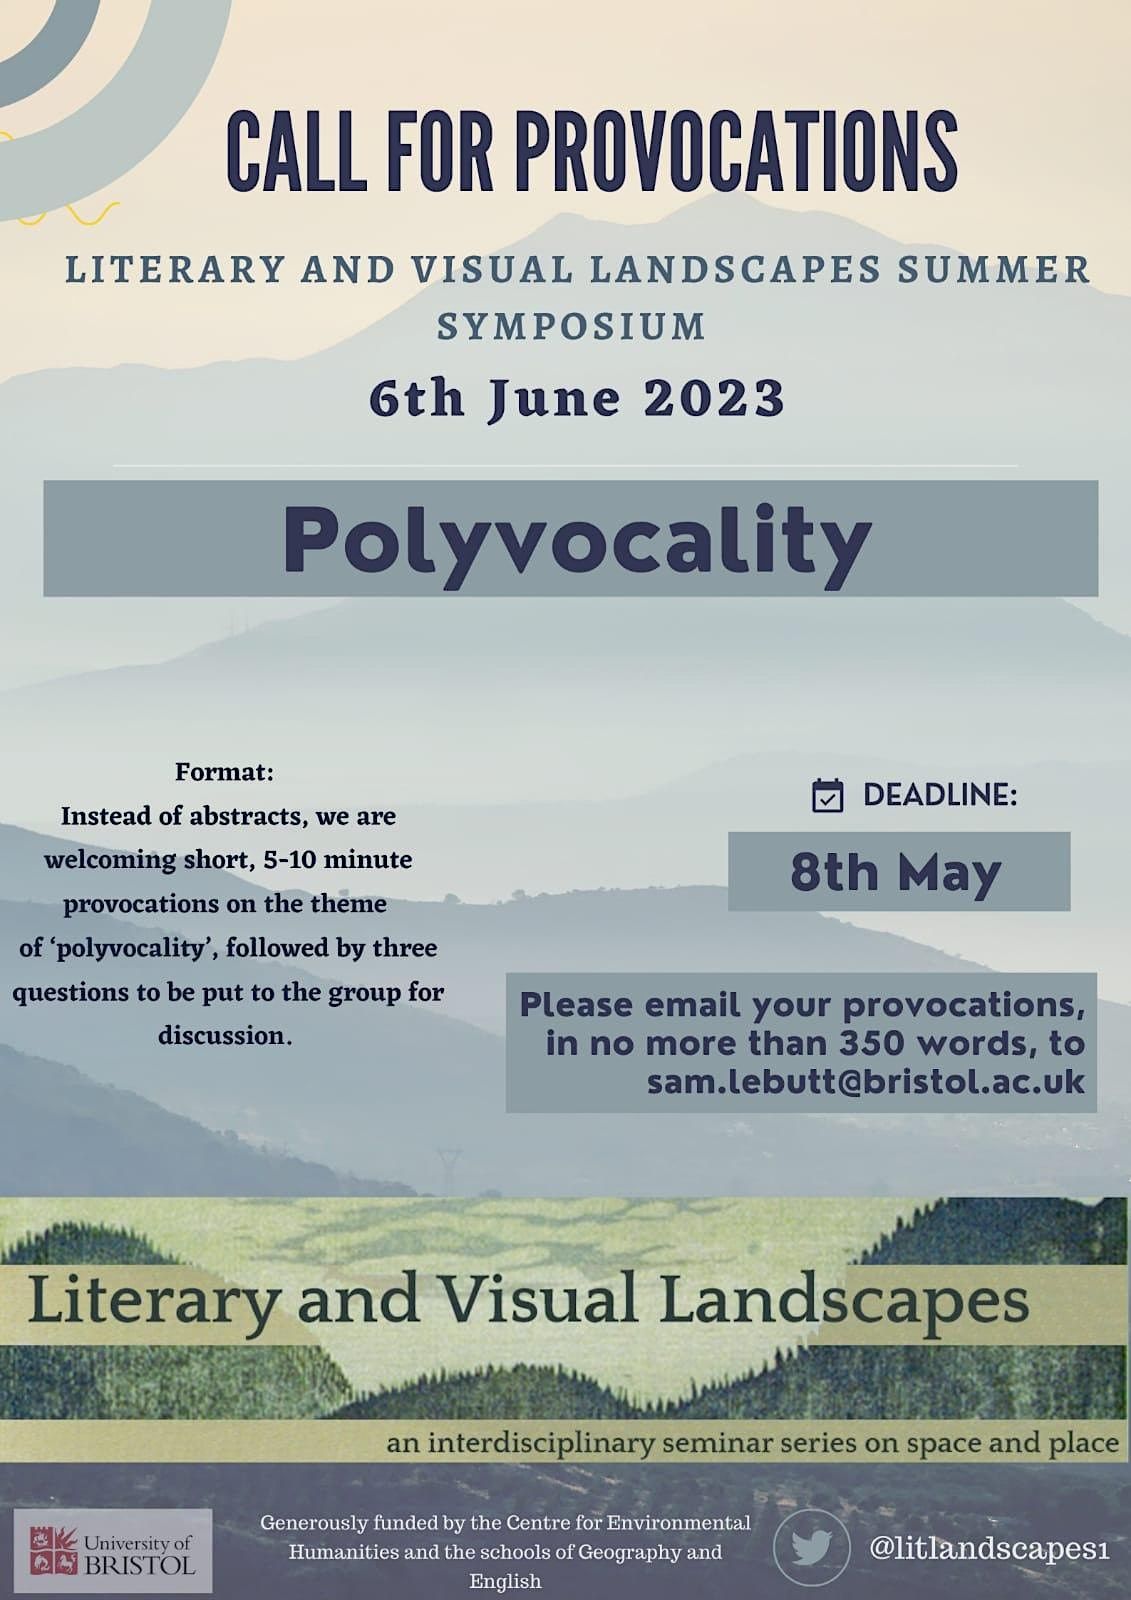 Literary and Visual Landscapes Summer Symposium